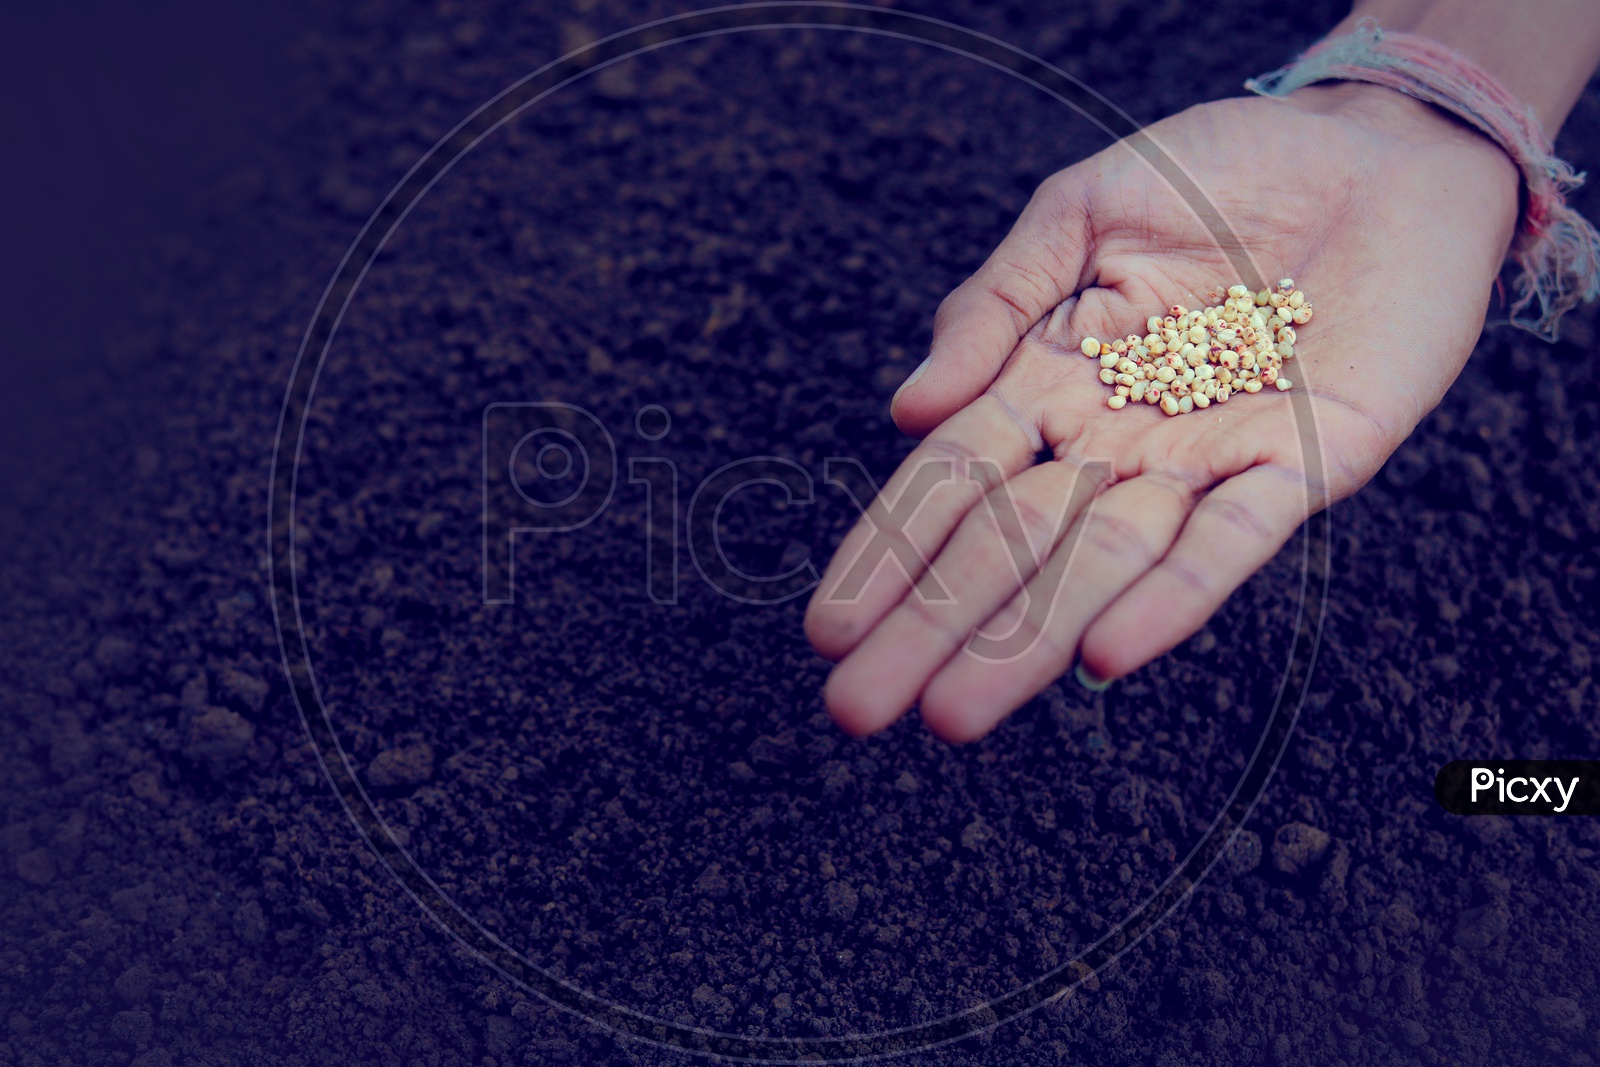 Jowar Seeds in a Farmers Hand For Seeding in Soil